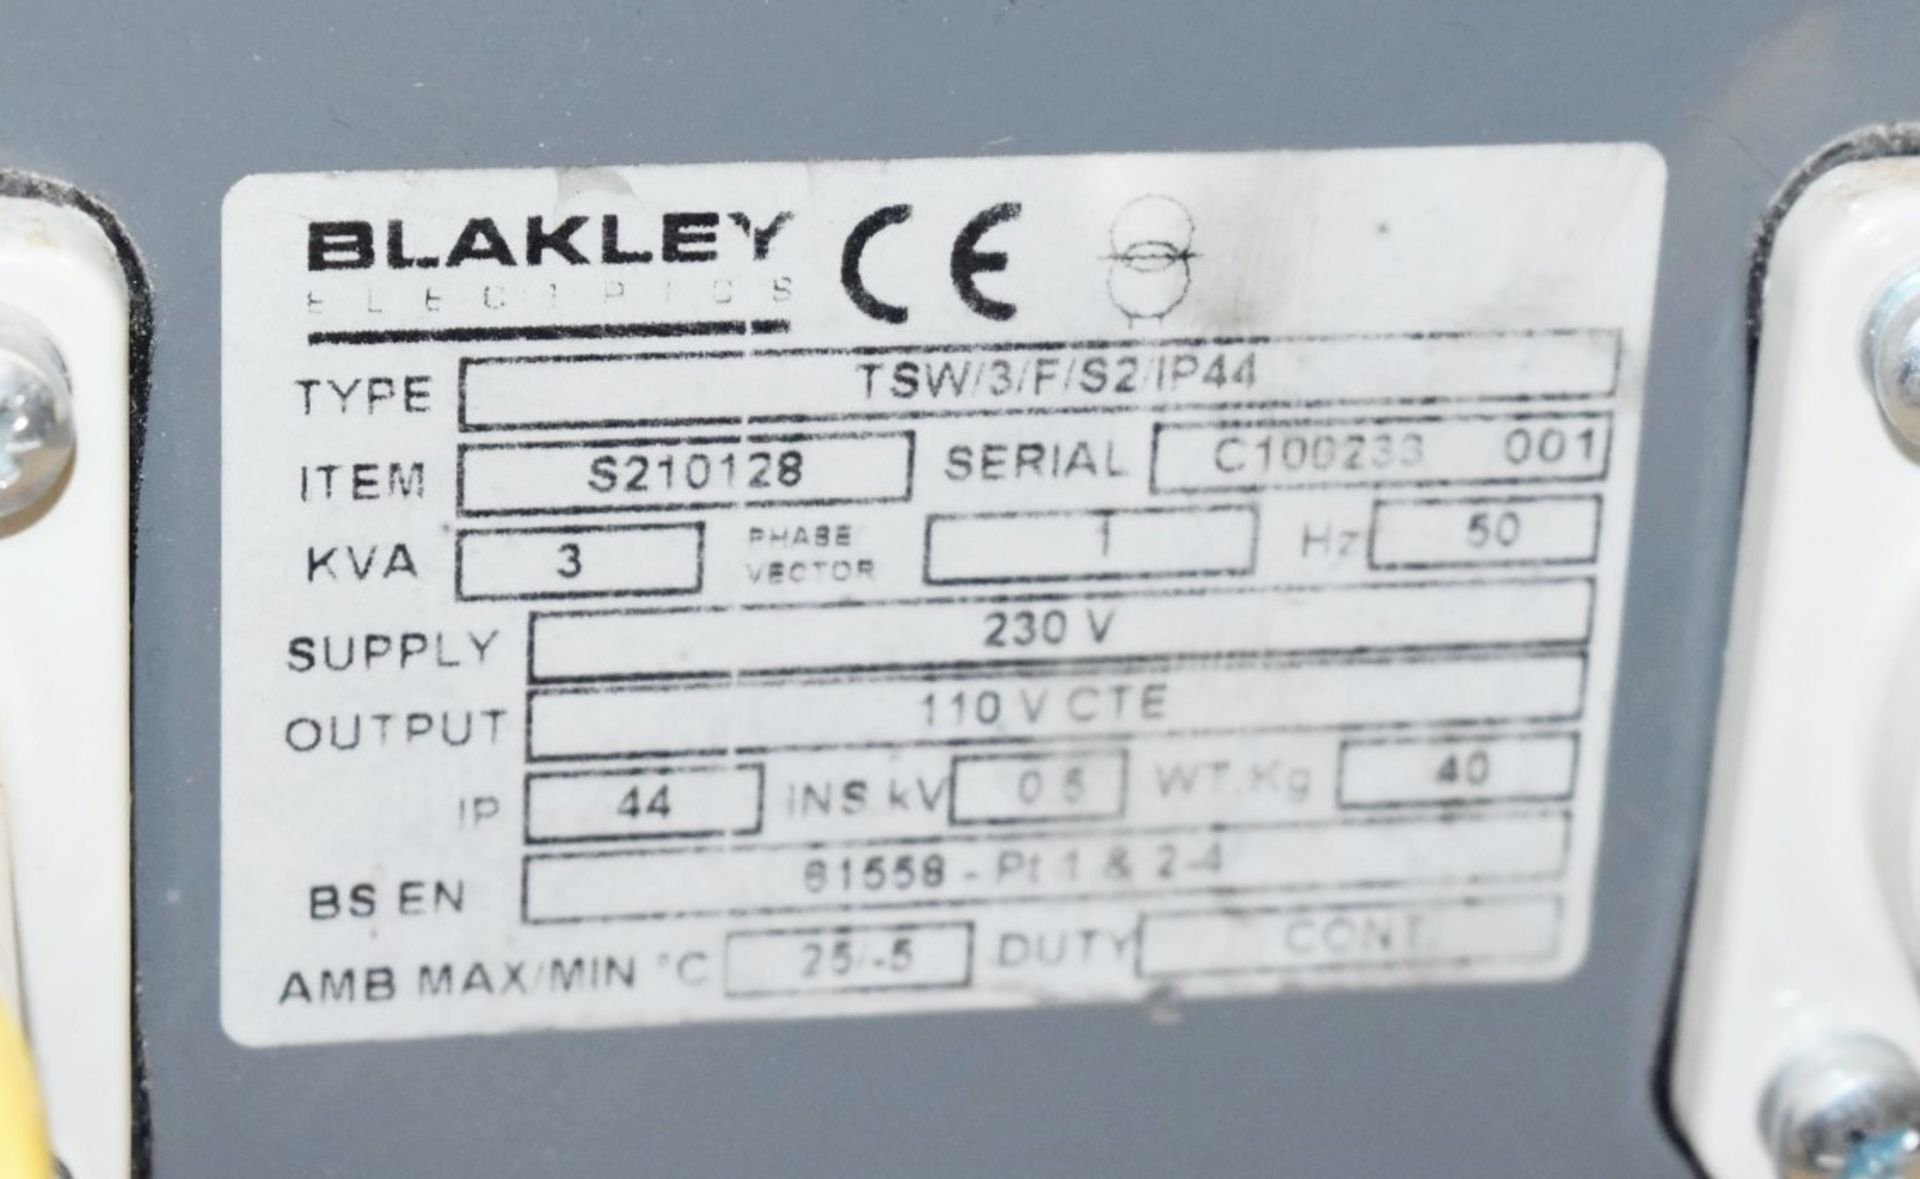 1 x Blakley 110v Site Power and Lighting Transformer - Single Phase 240v to 110v - Type: S21028 - Image 6 of 7